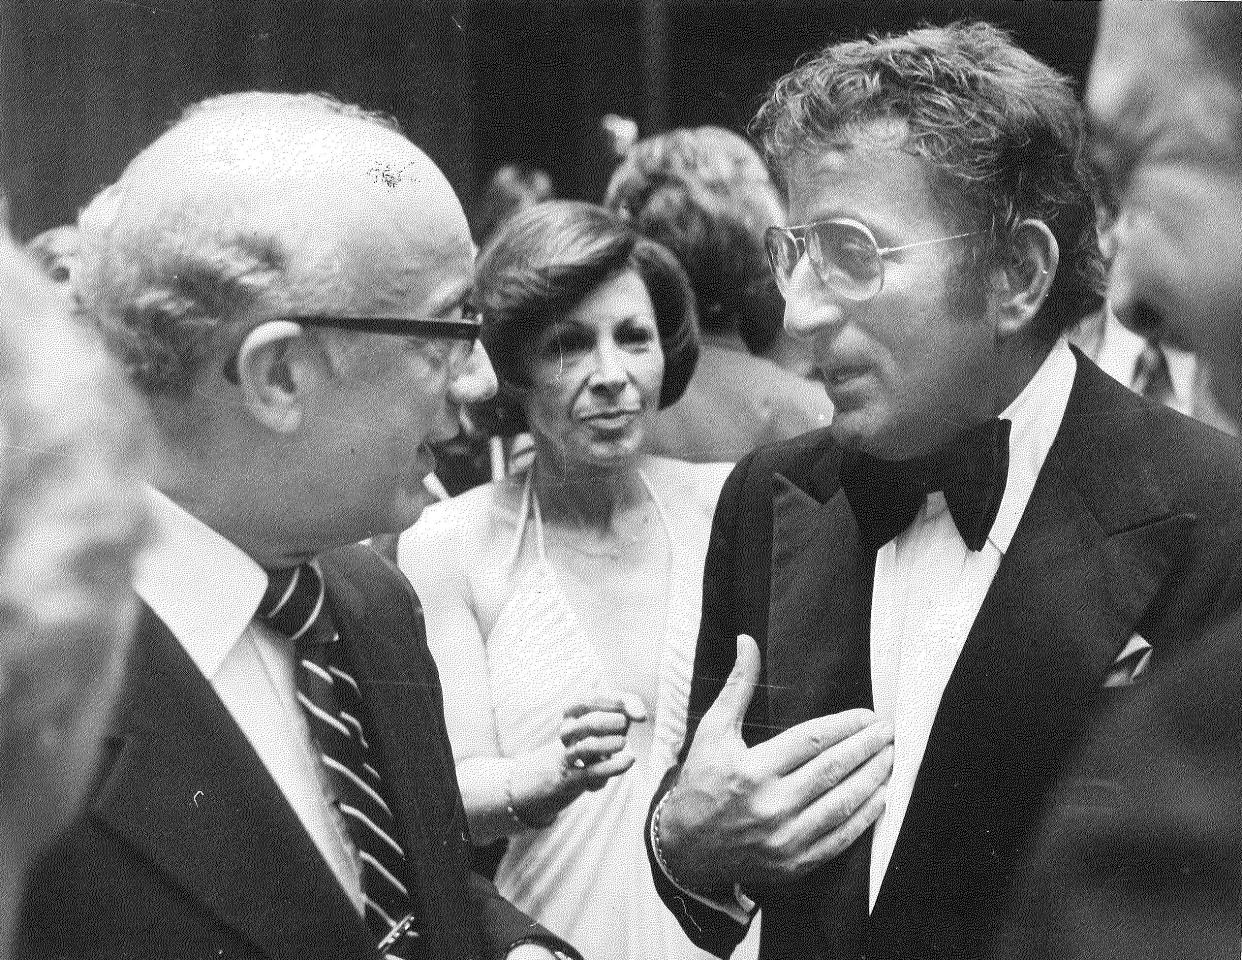 University of Akron President Dominic Guzzetta, left, and Tony Bennett, right, talk after Bennett's 1976 performance at E.J. Thomas Hall.